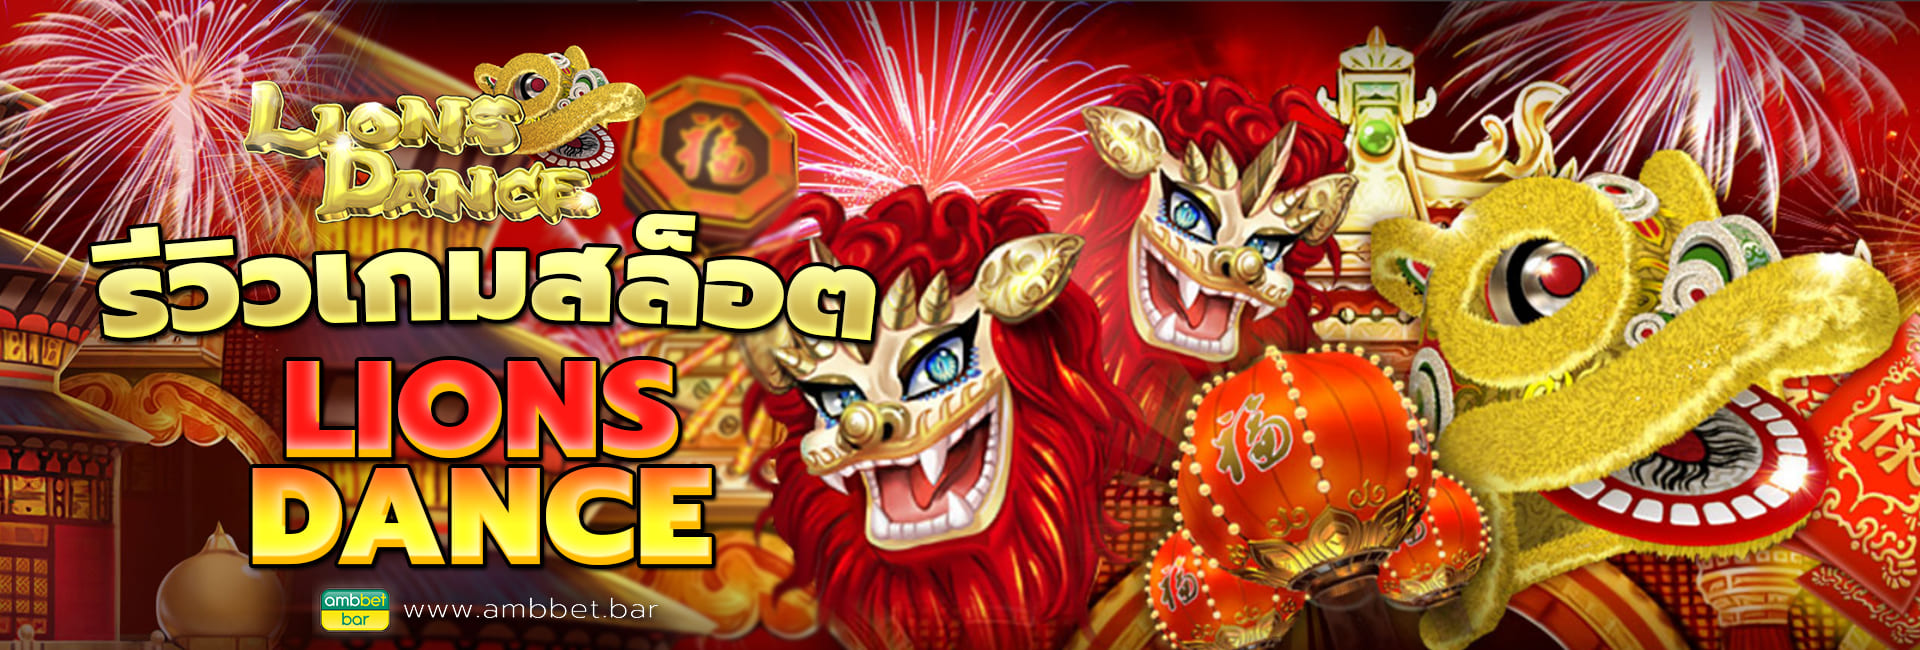 Lions Dance banner